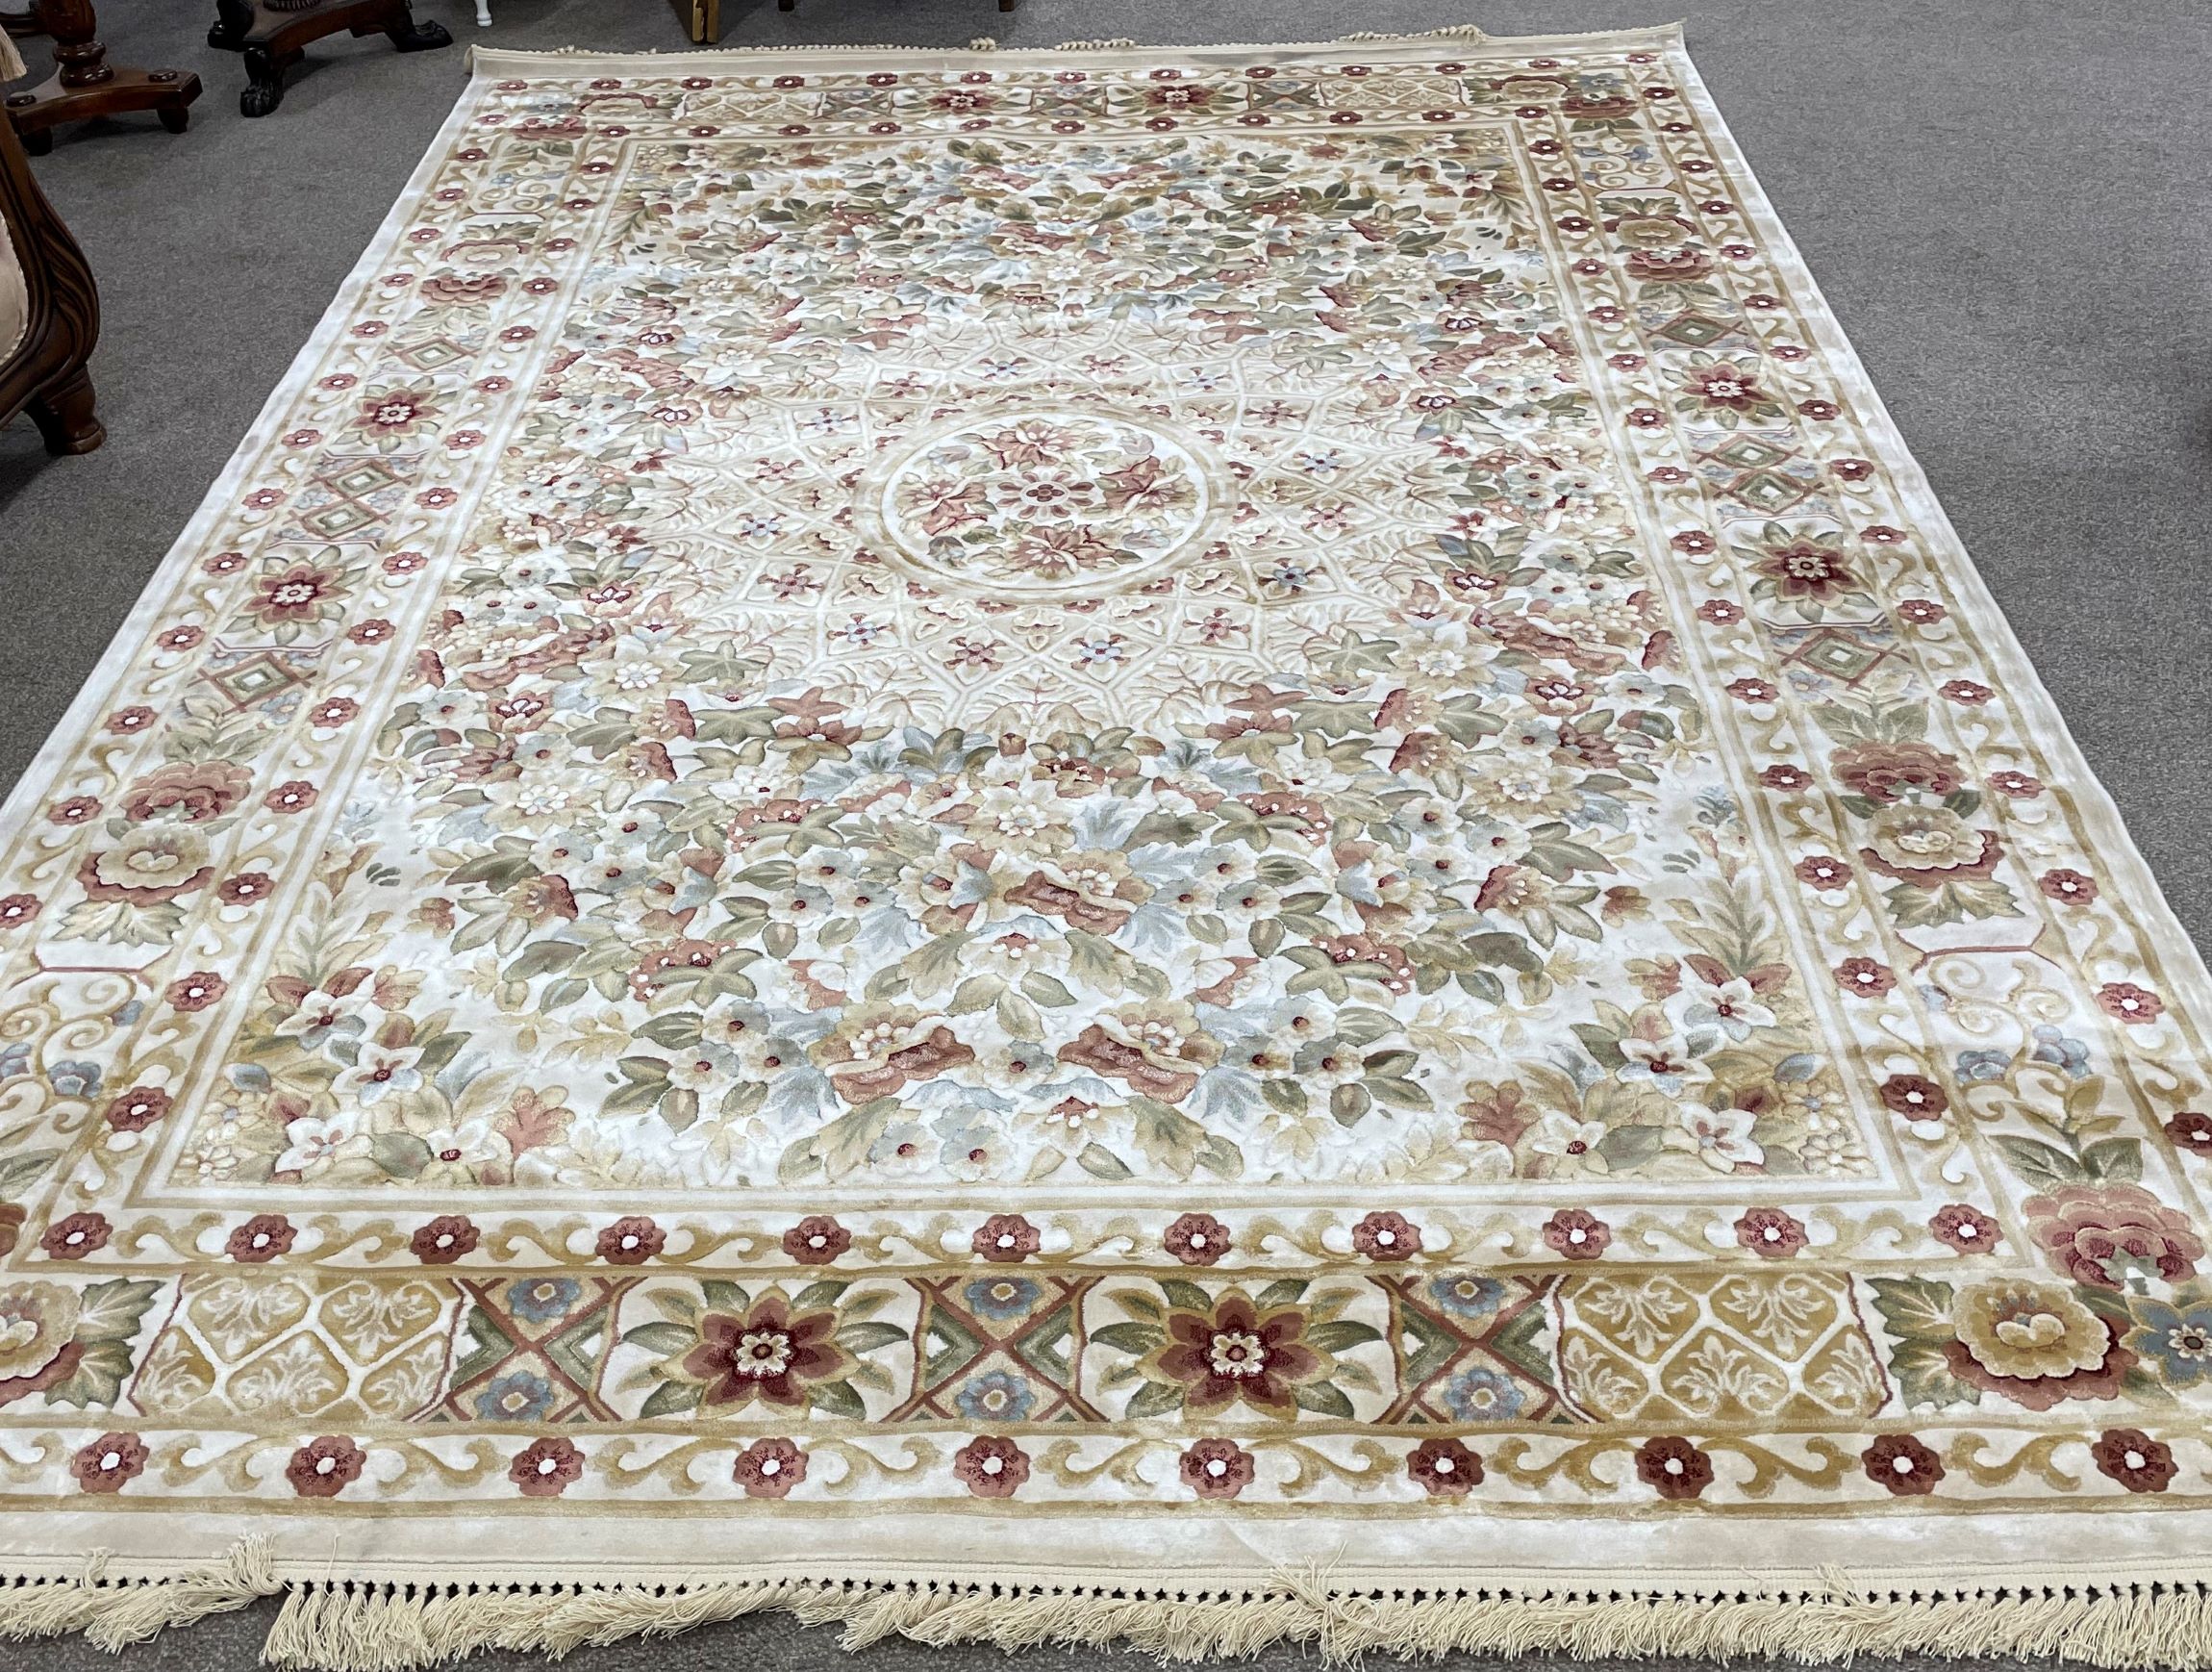 Gold & cream ground full pile Oriental carpet 350cm by 240cm - Image 5 of 8